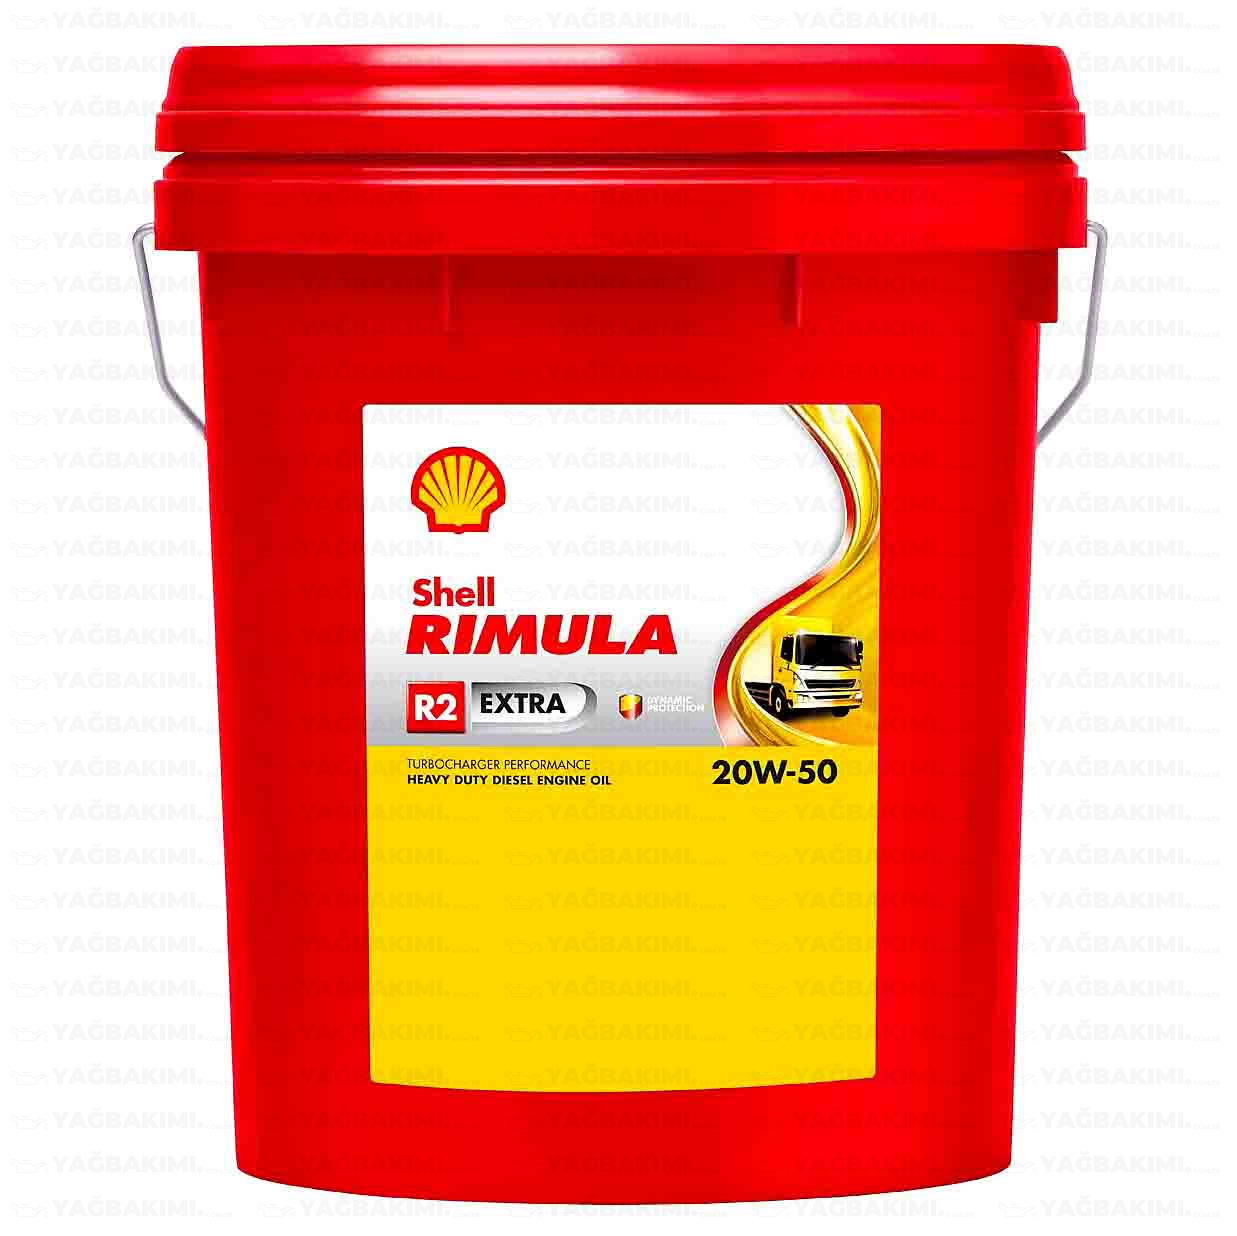 Shell Rimula R2 Extra 20W50